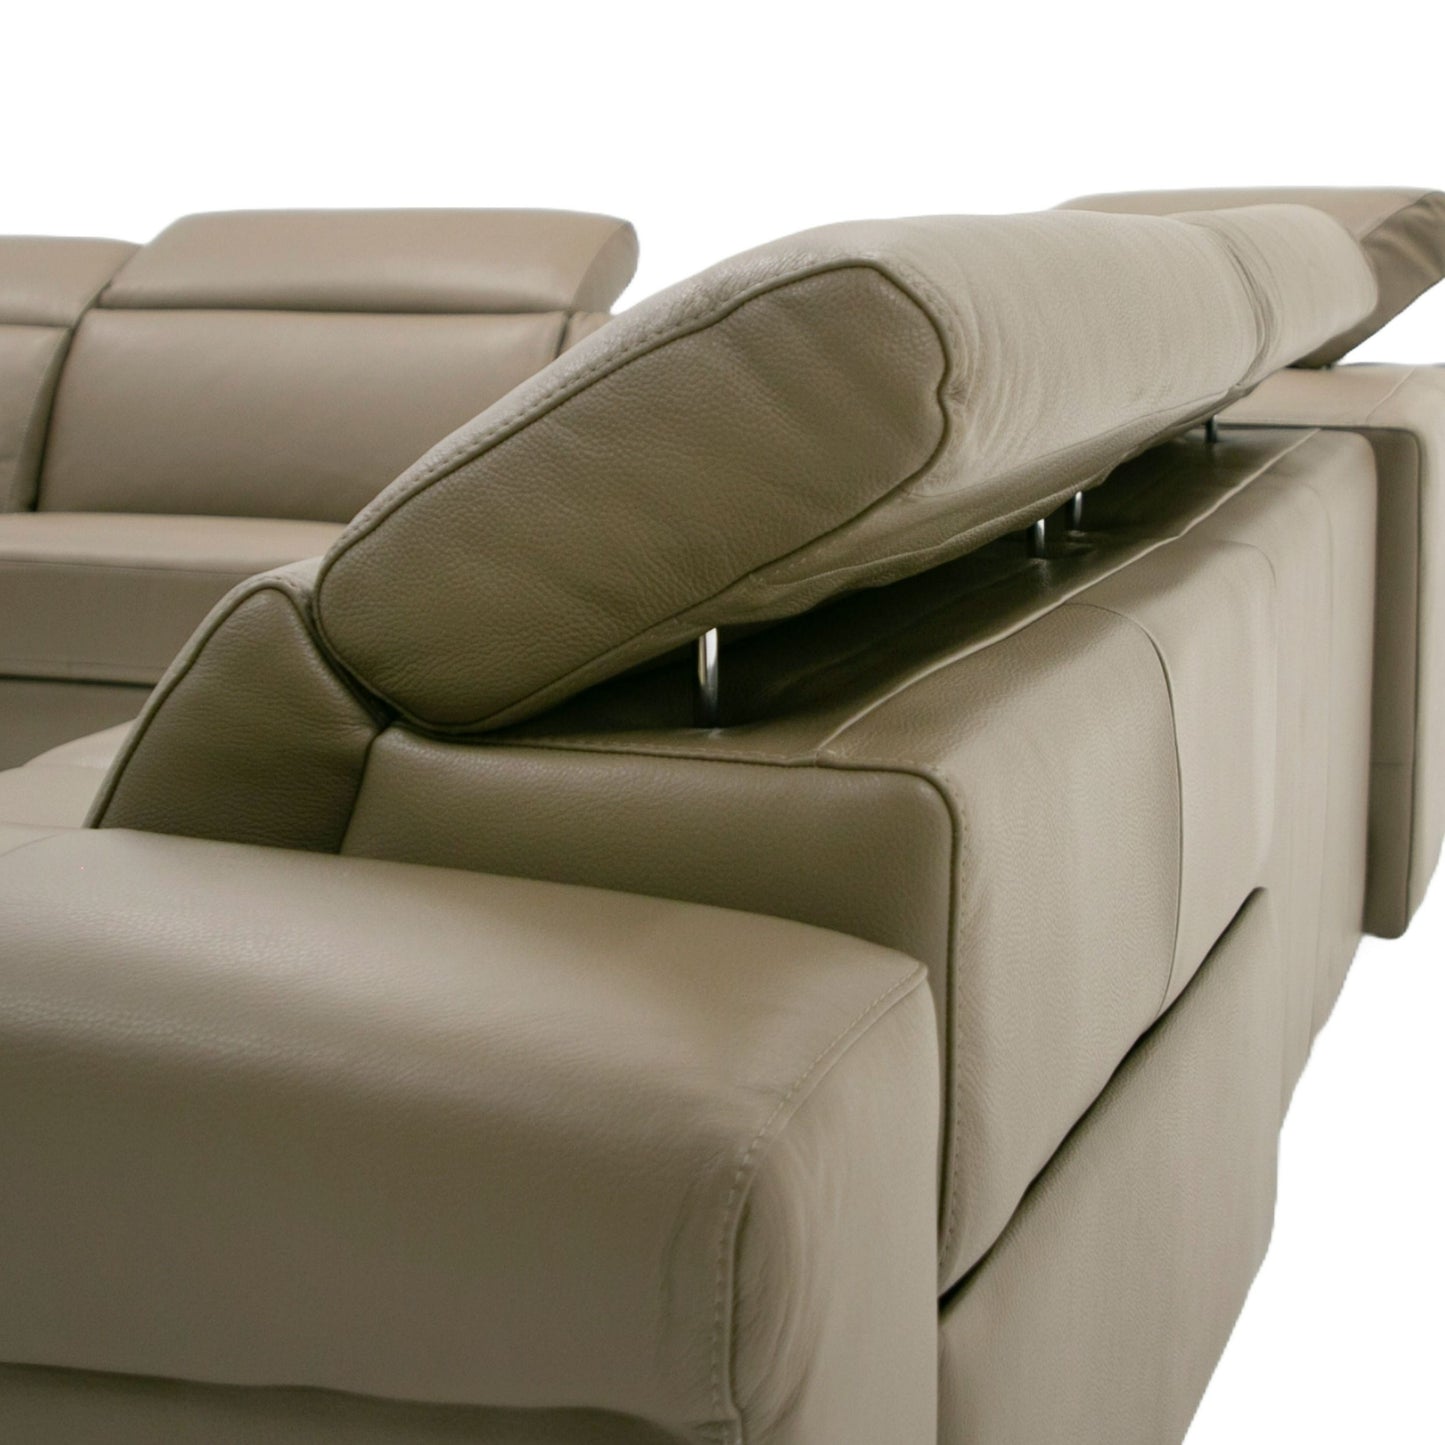 Coronelli Collezioni Riviera - Italian Modern Taupe Leather Sectional Sofa w/ 2 Recliners